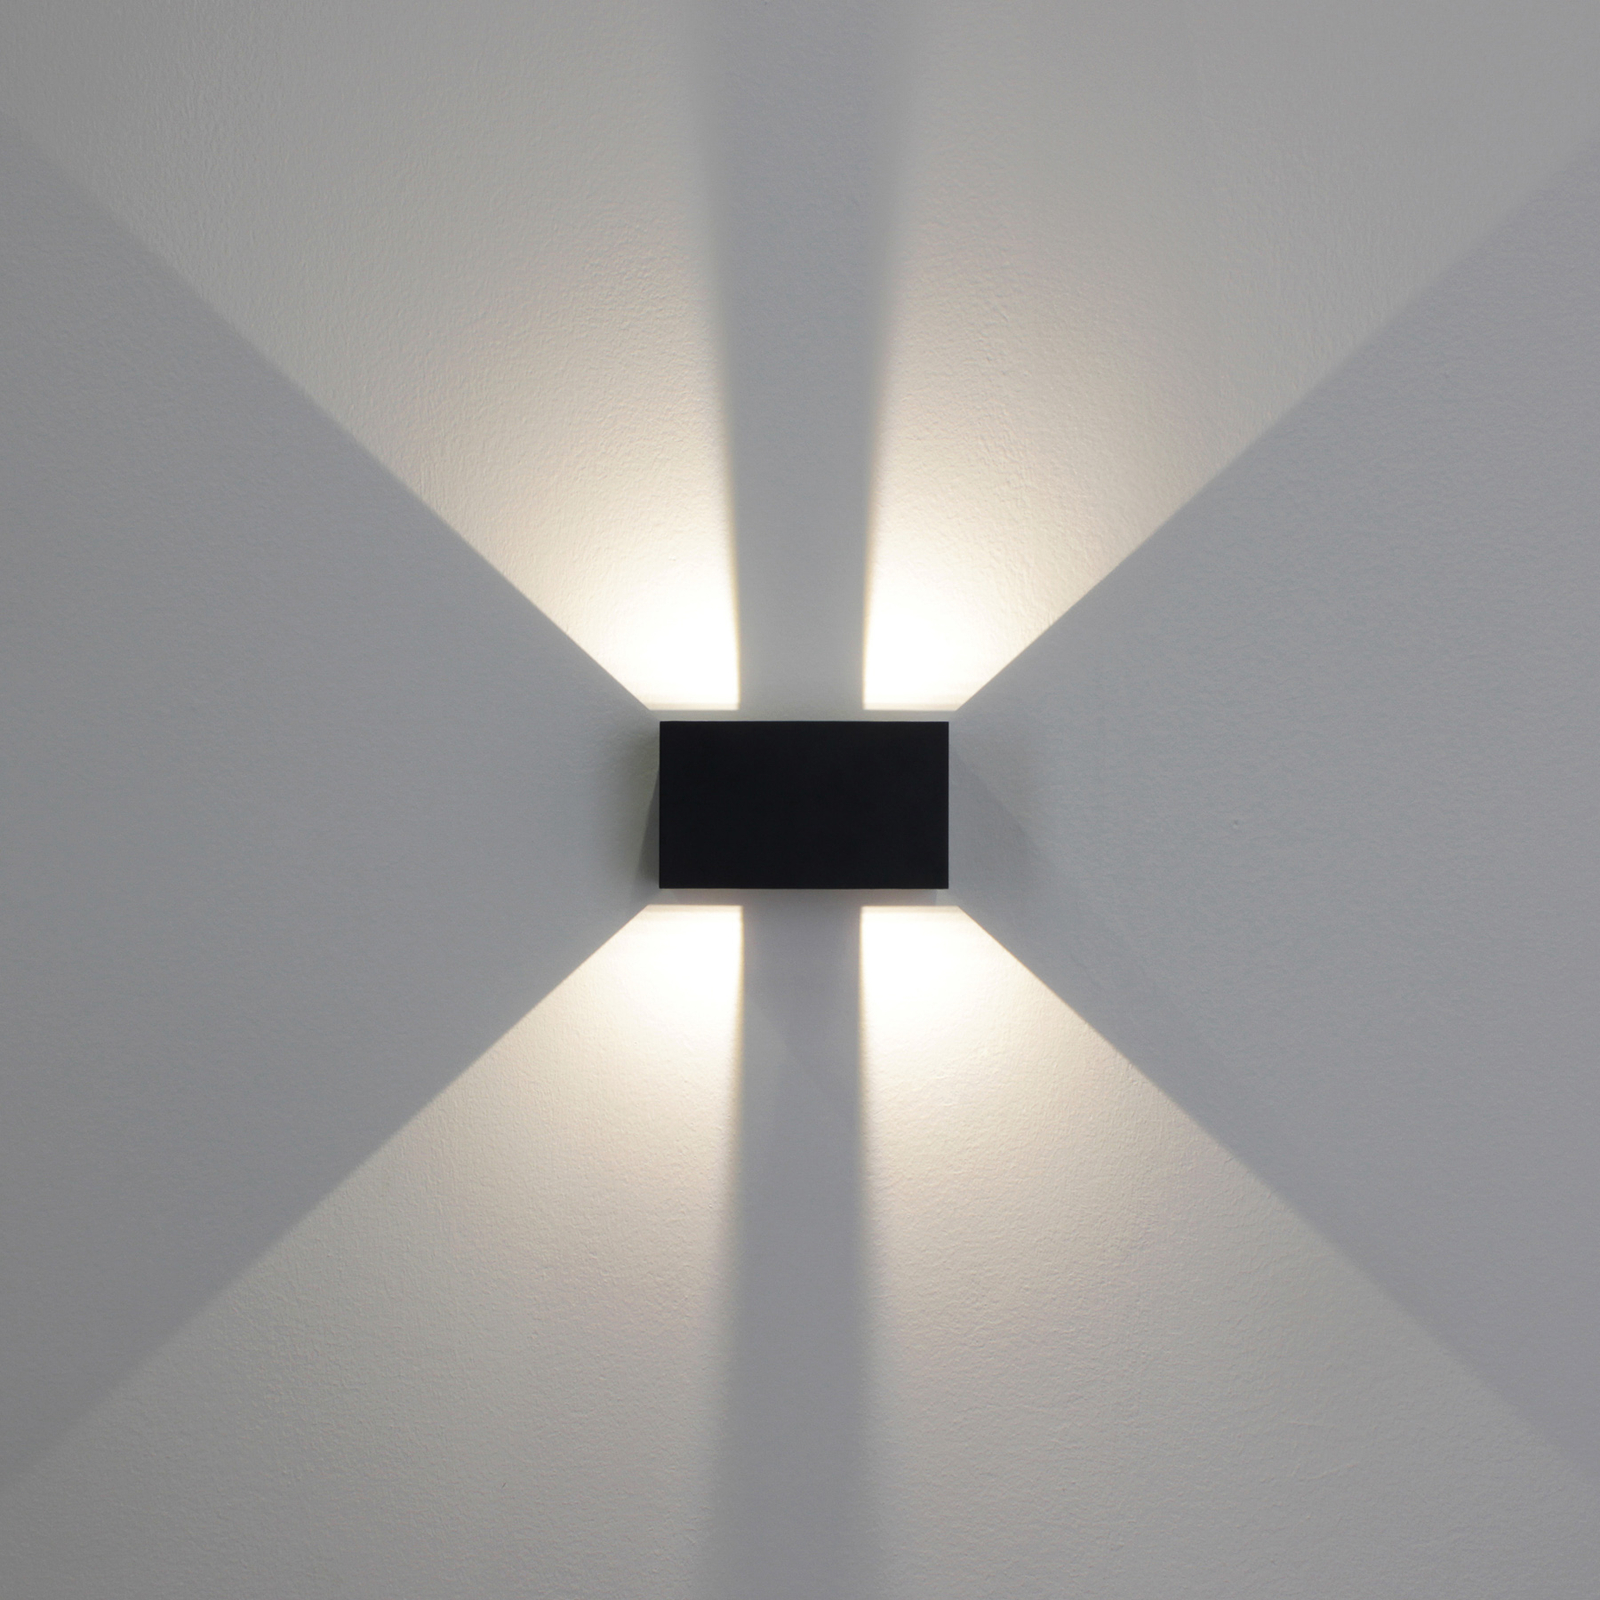 LED udendørs væglampe Dakar, antracit, bredde 17,3 cm, aluminium